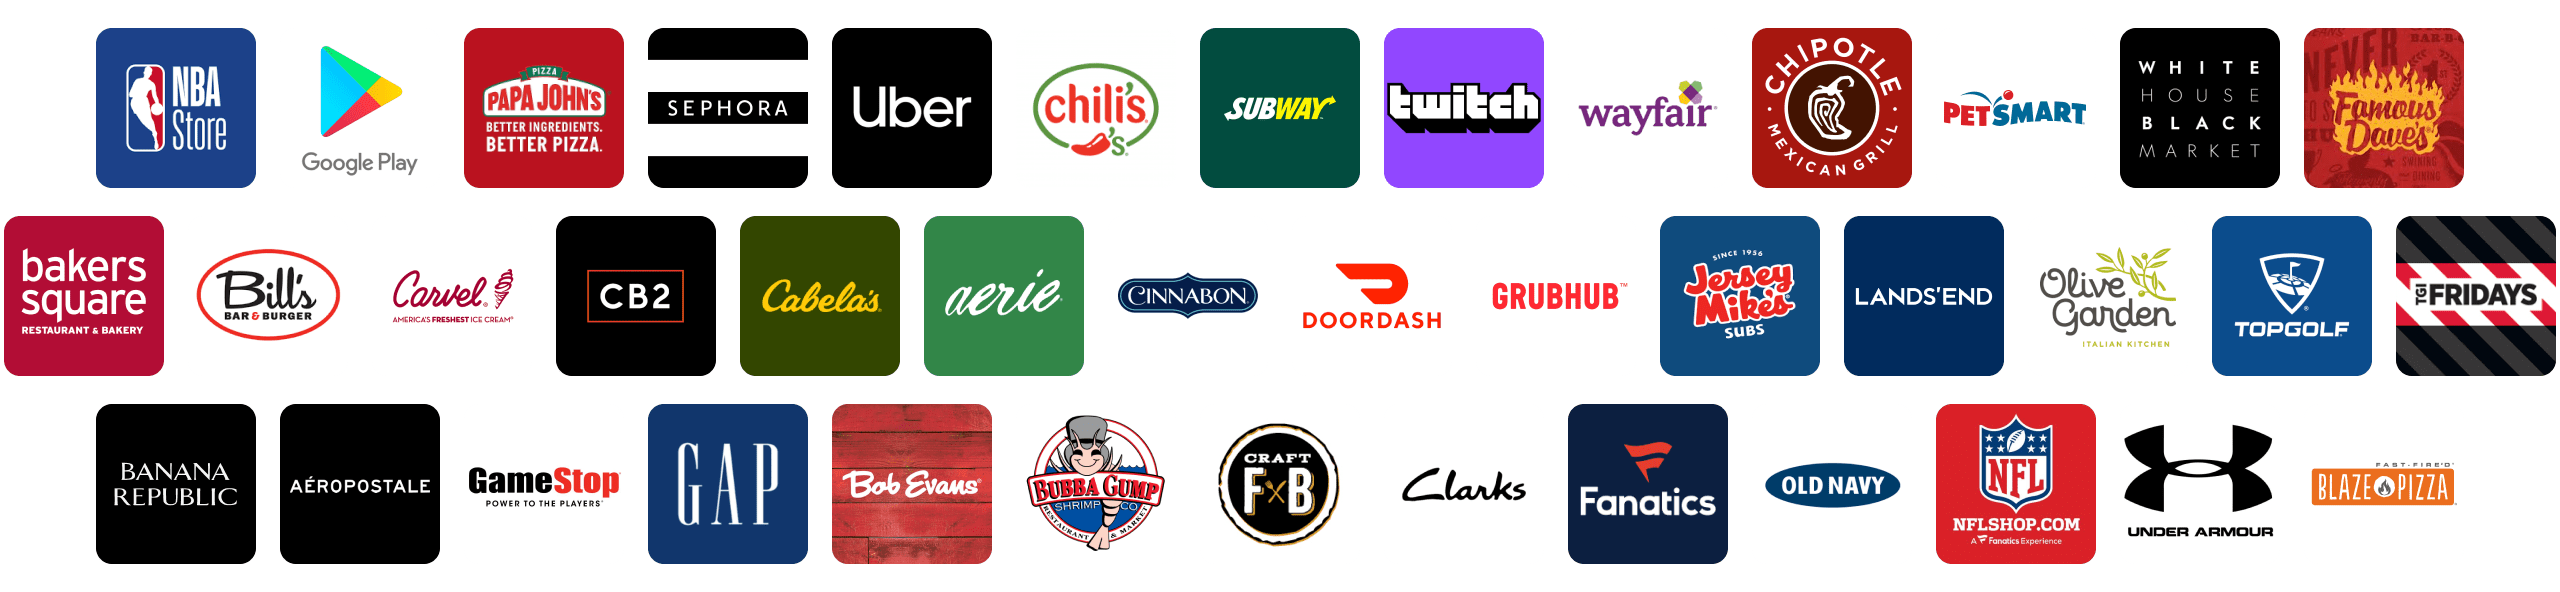 favourite-brands-desktop